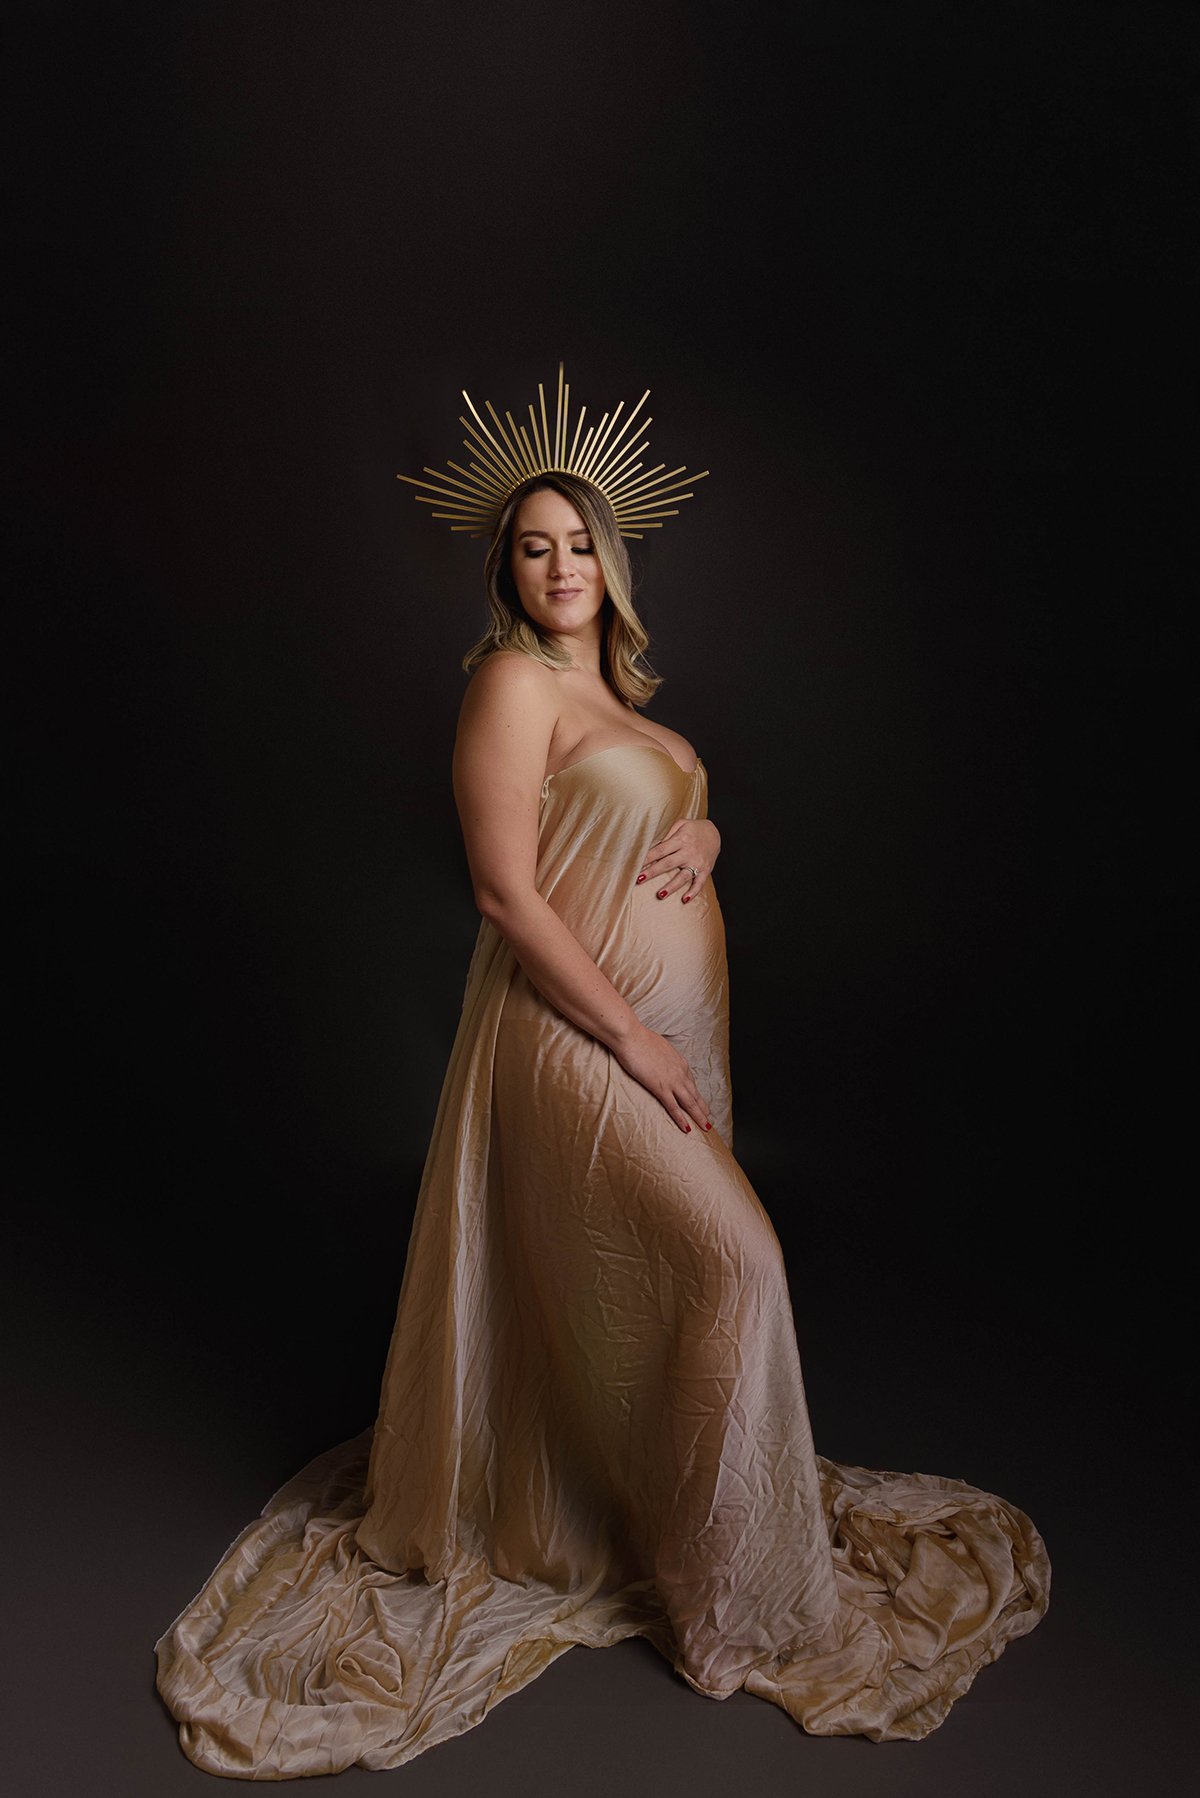 maternity-pregnancy-photographer-san-juan-puerto-rico-fabric-dress-gown-fotografa-maternidad-embarazo-11.jpg